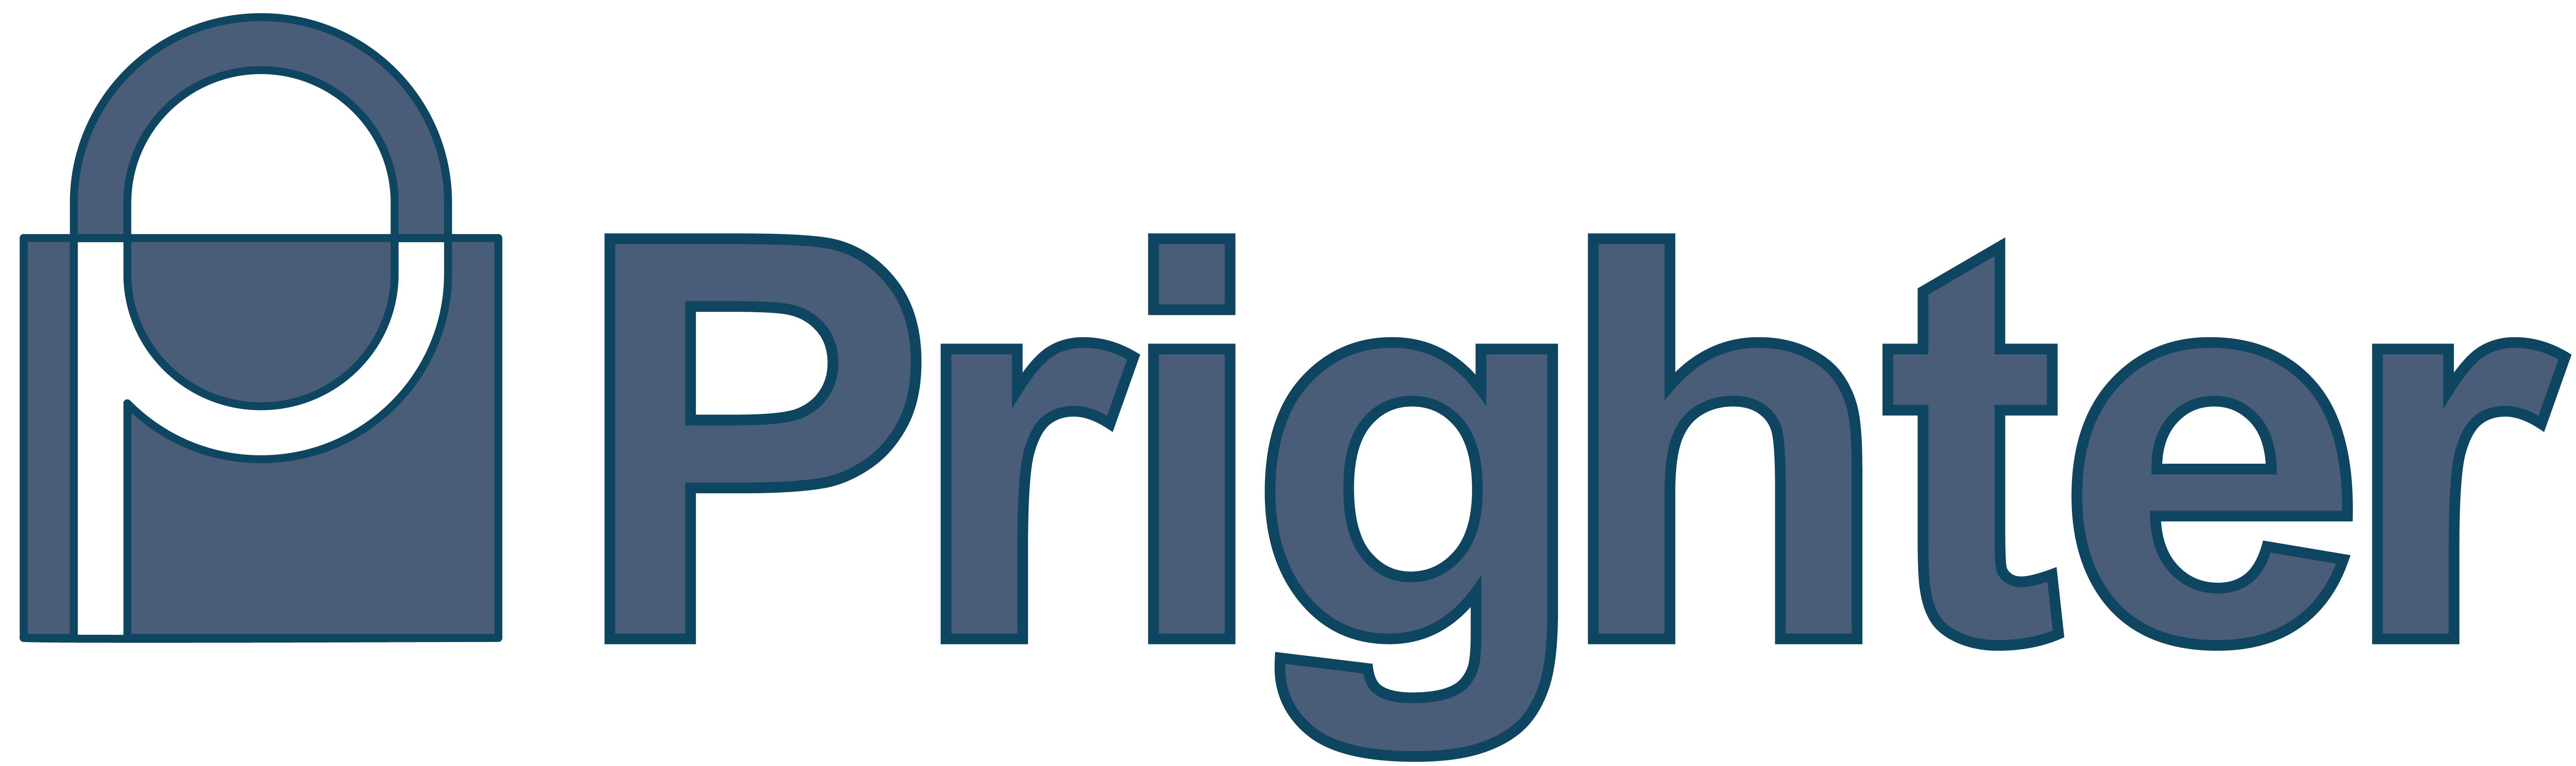 Prighter Main Logo